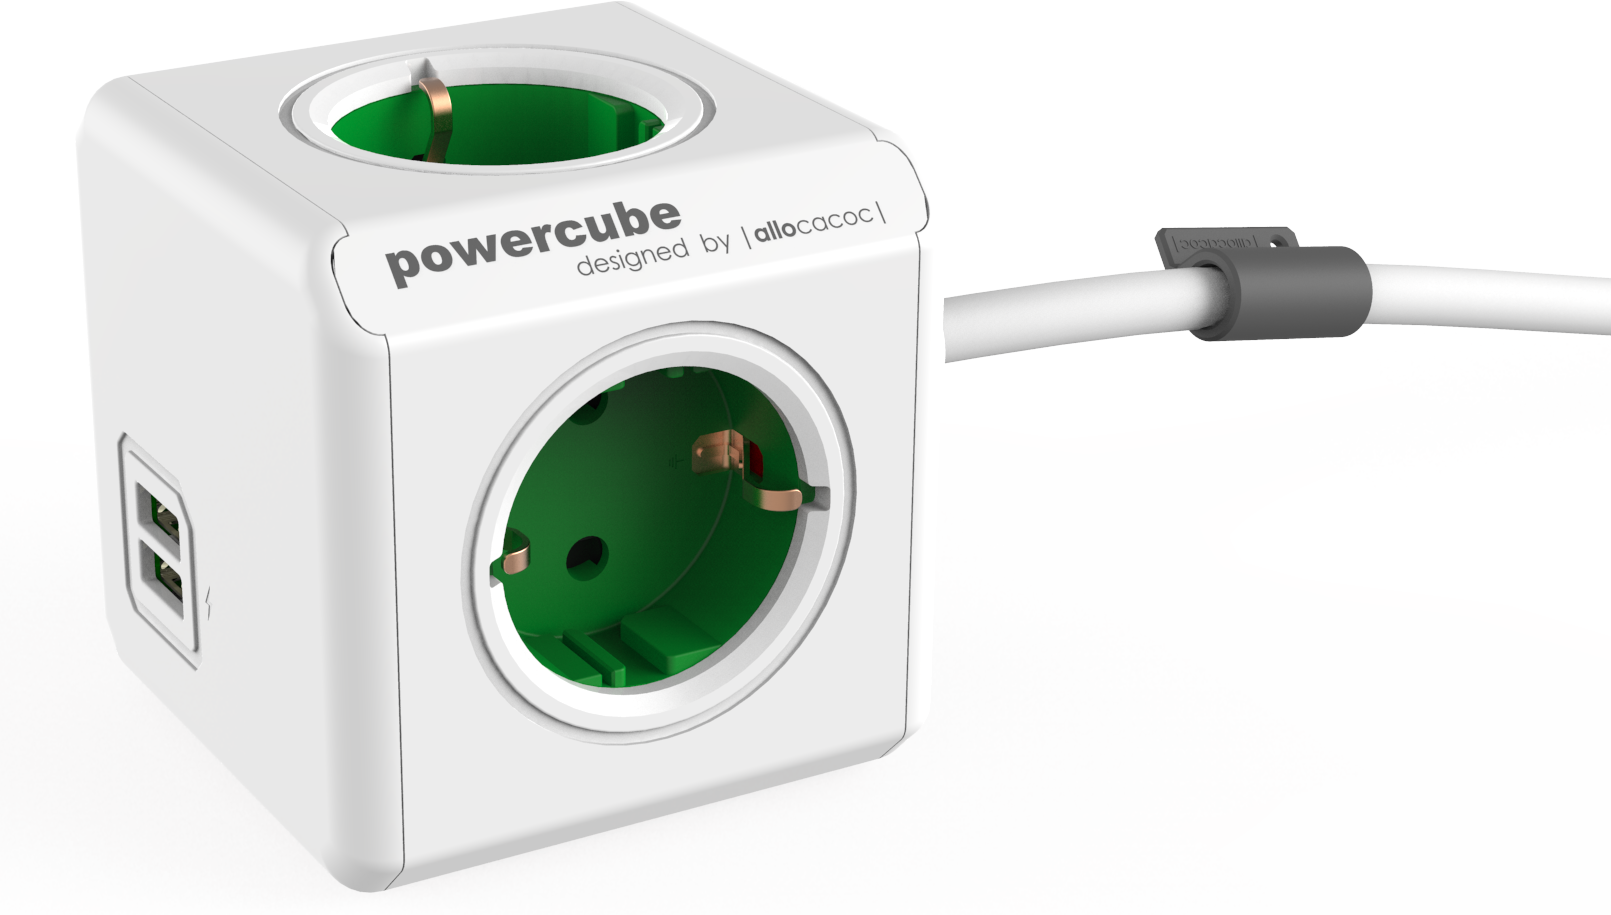 Power Καλώδιο PowerCube Extended Λευκό-Πράσινο χρώμα 150 cm Schuko-USB